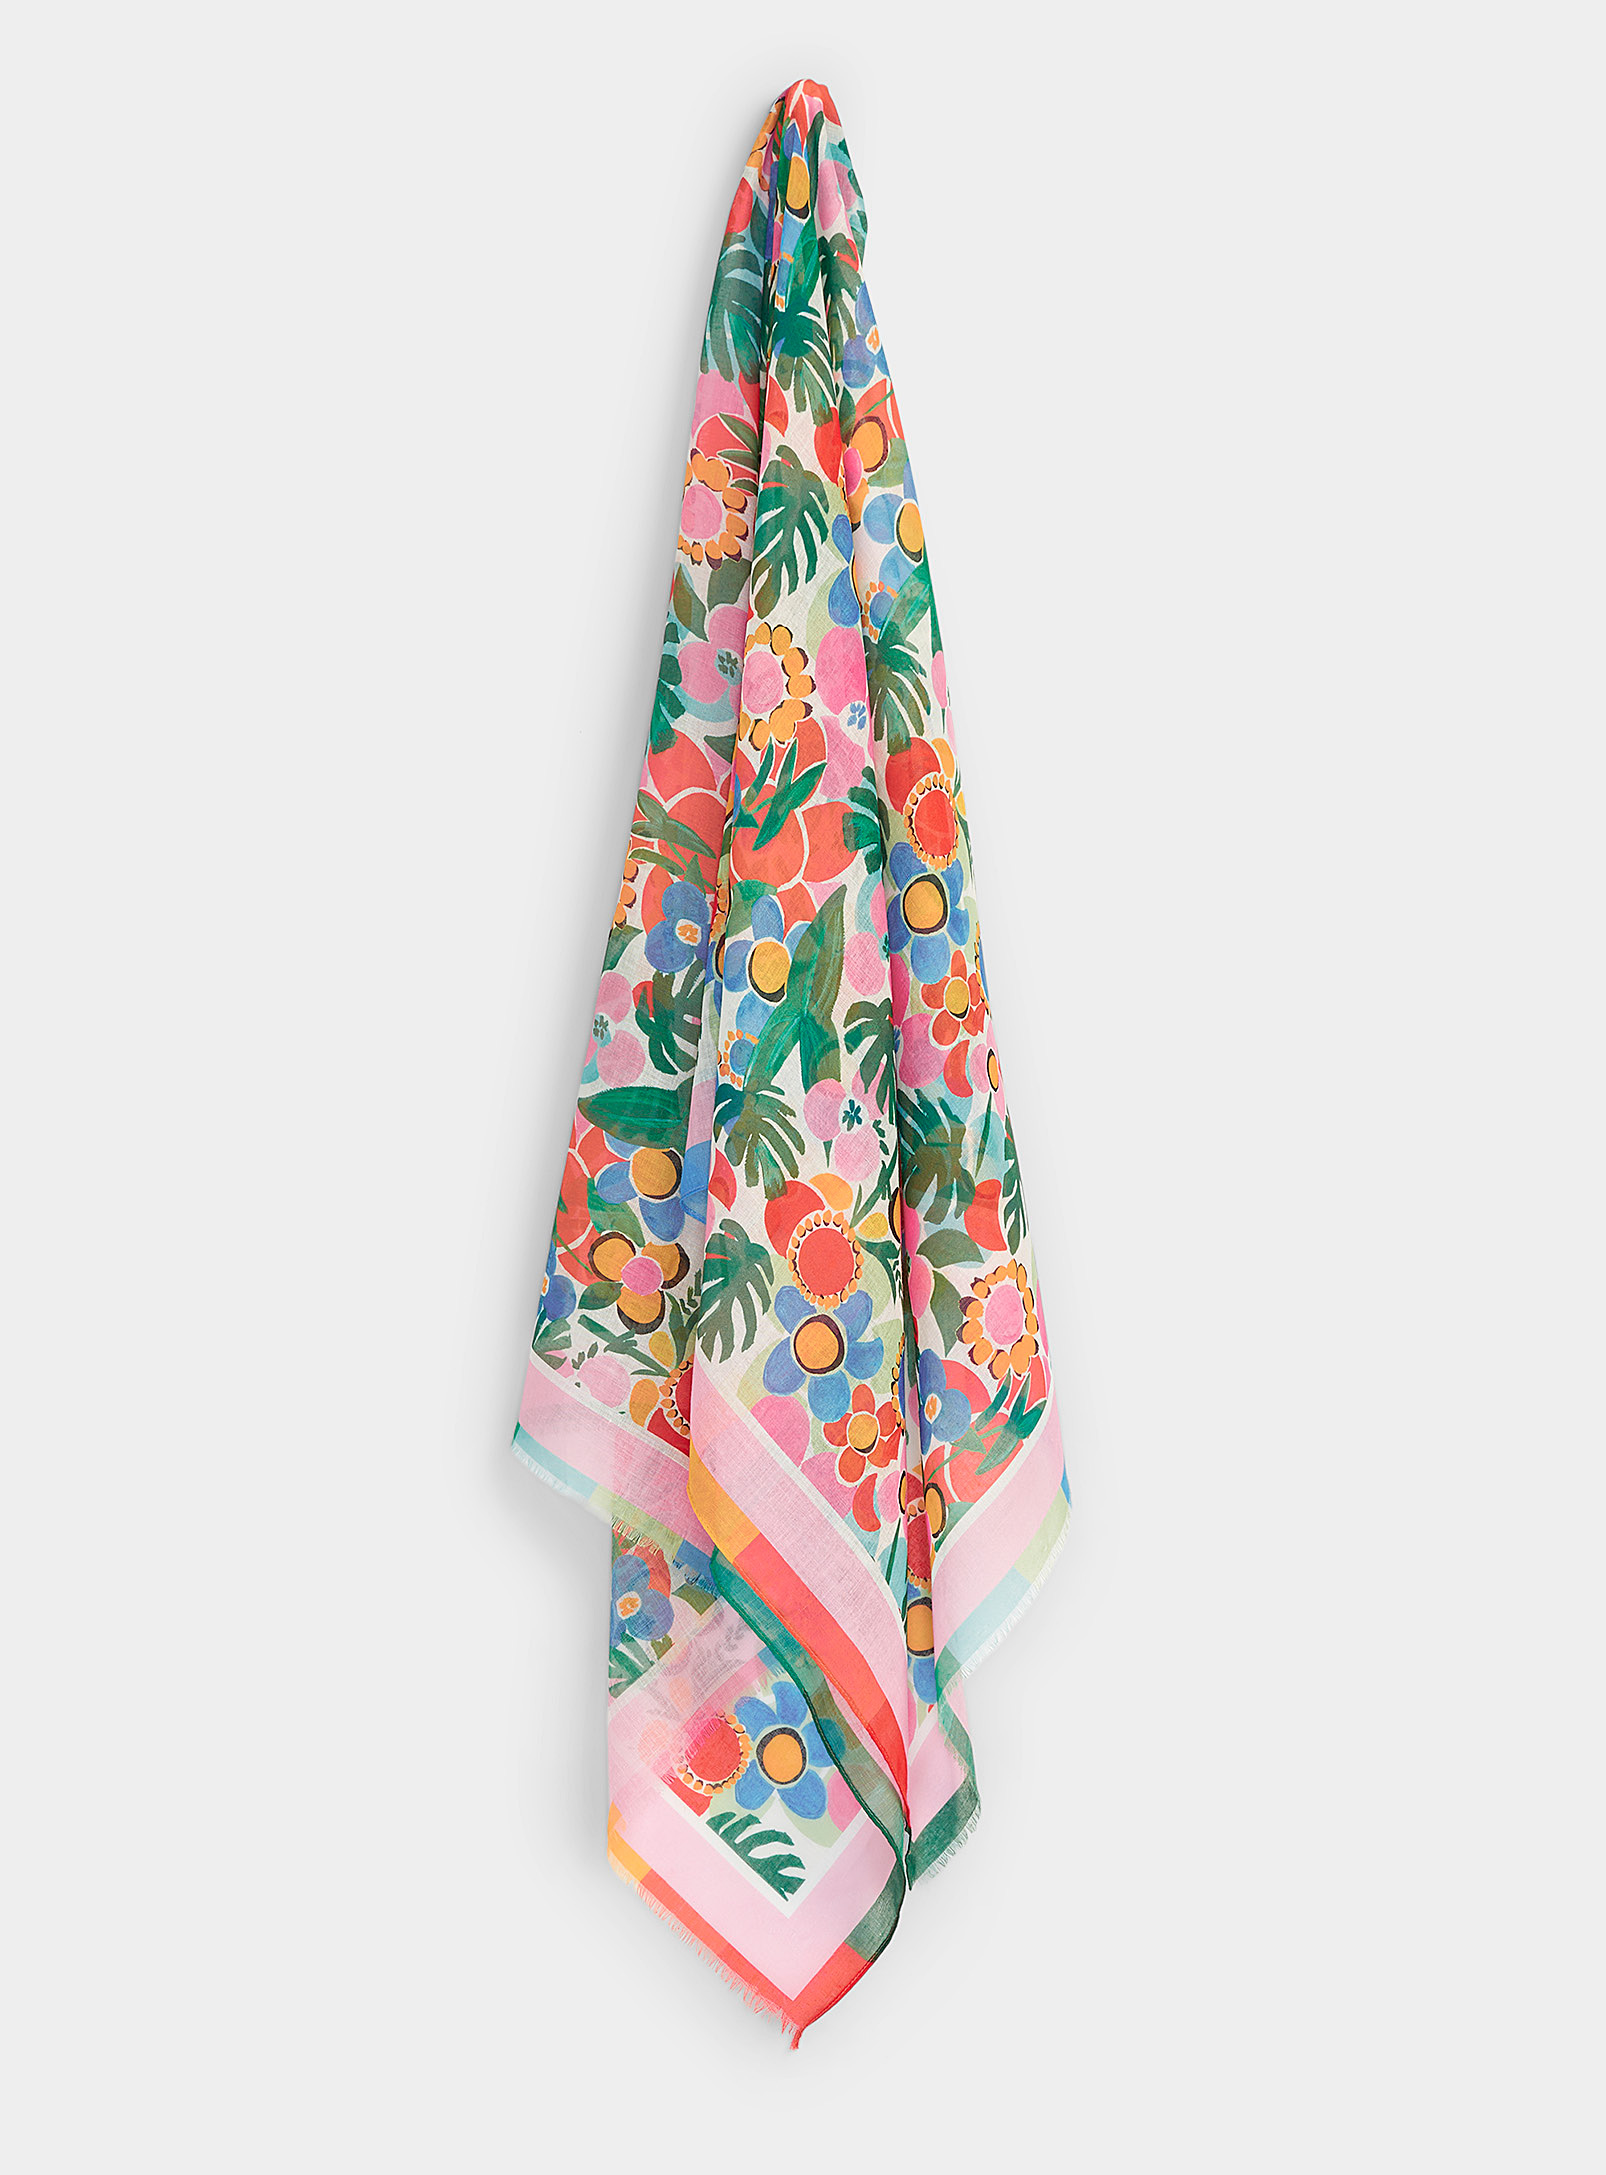 Simons - Women's Wildflower field lightweight scarf